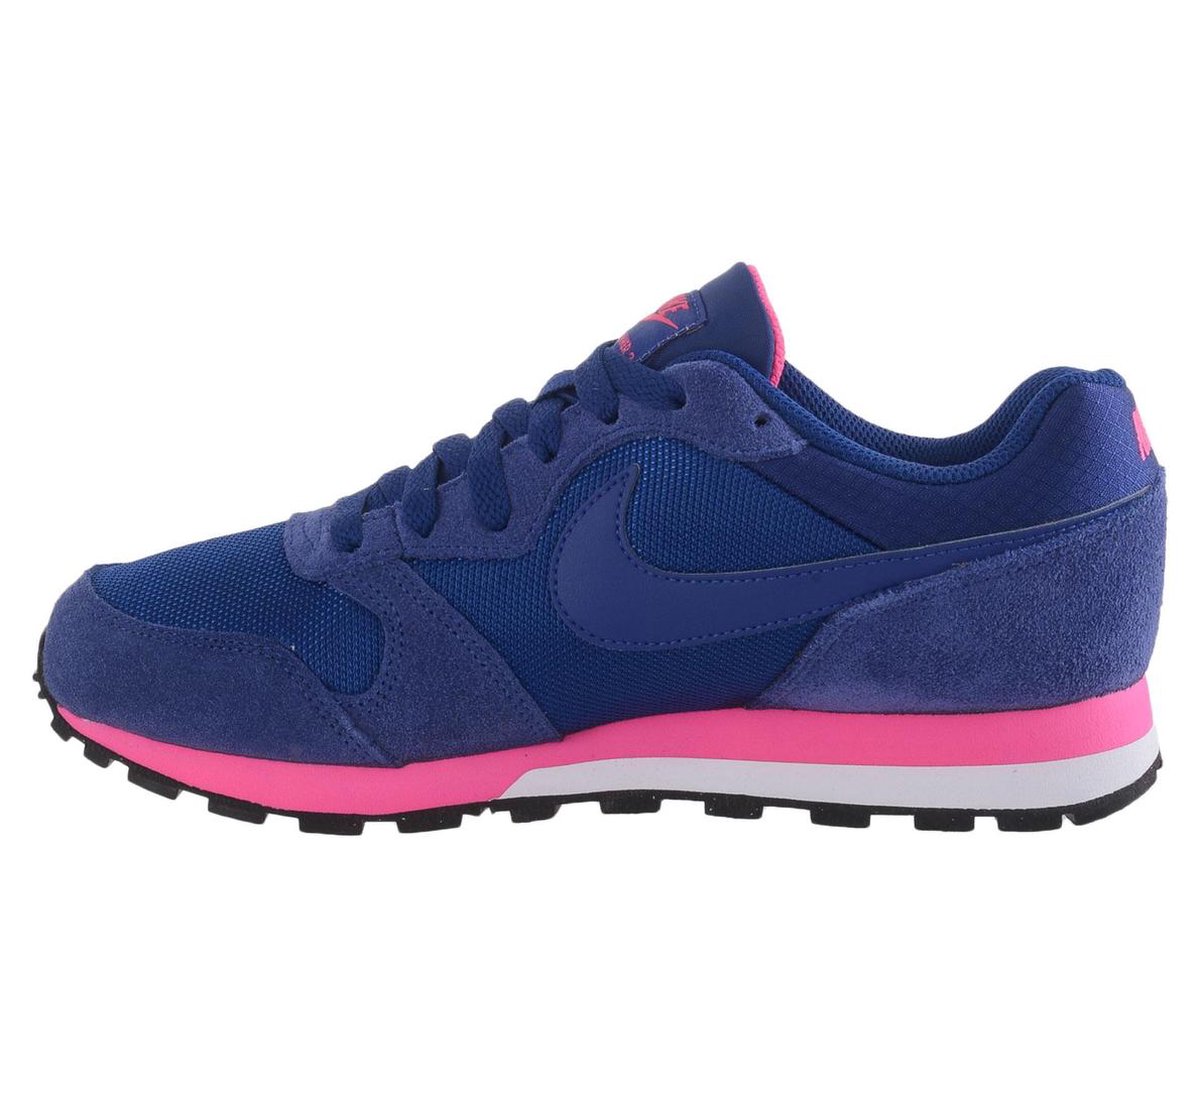 verbanning lucht rol Nike MD Runner 2 - Sneakers - Dames - Blauw/Roze - Maat 37.5 | bol.com